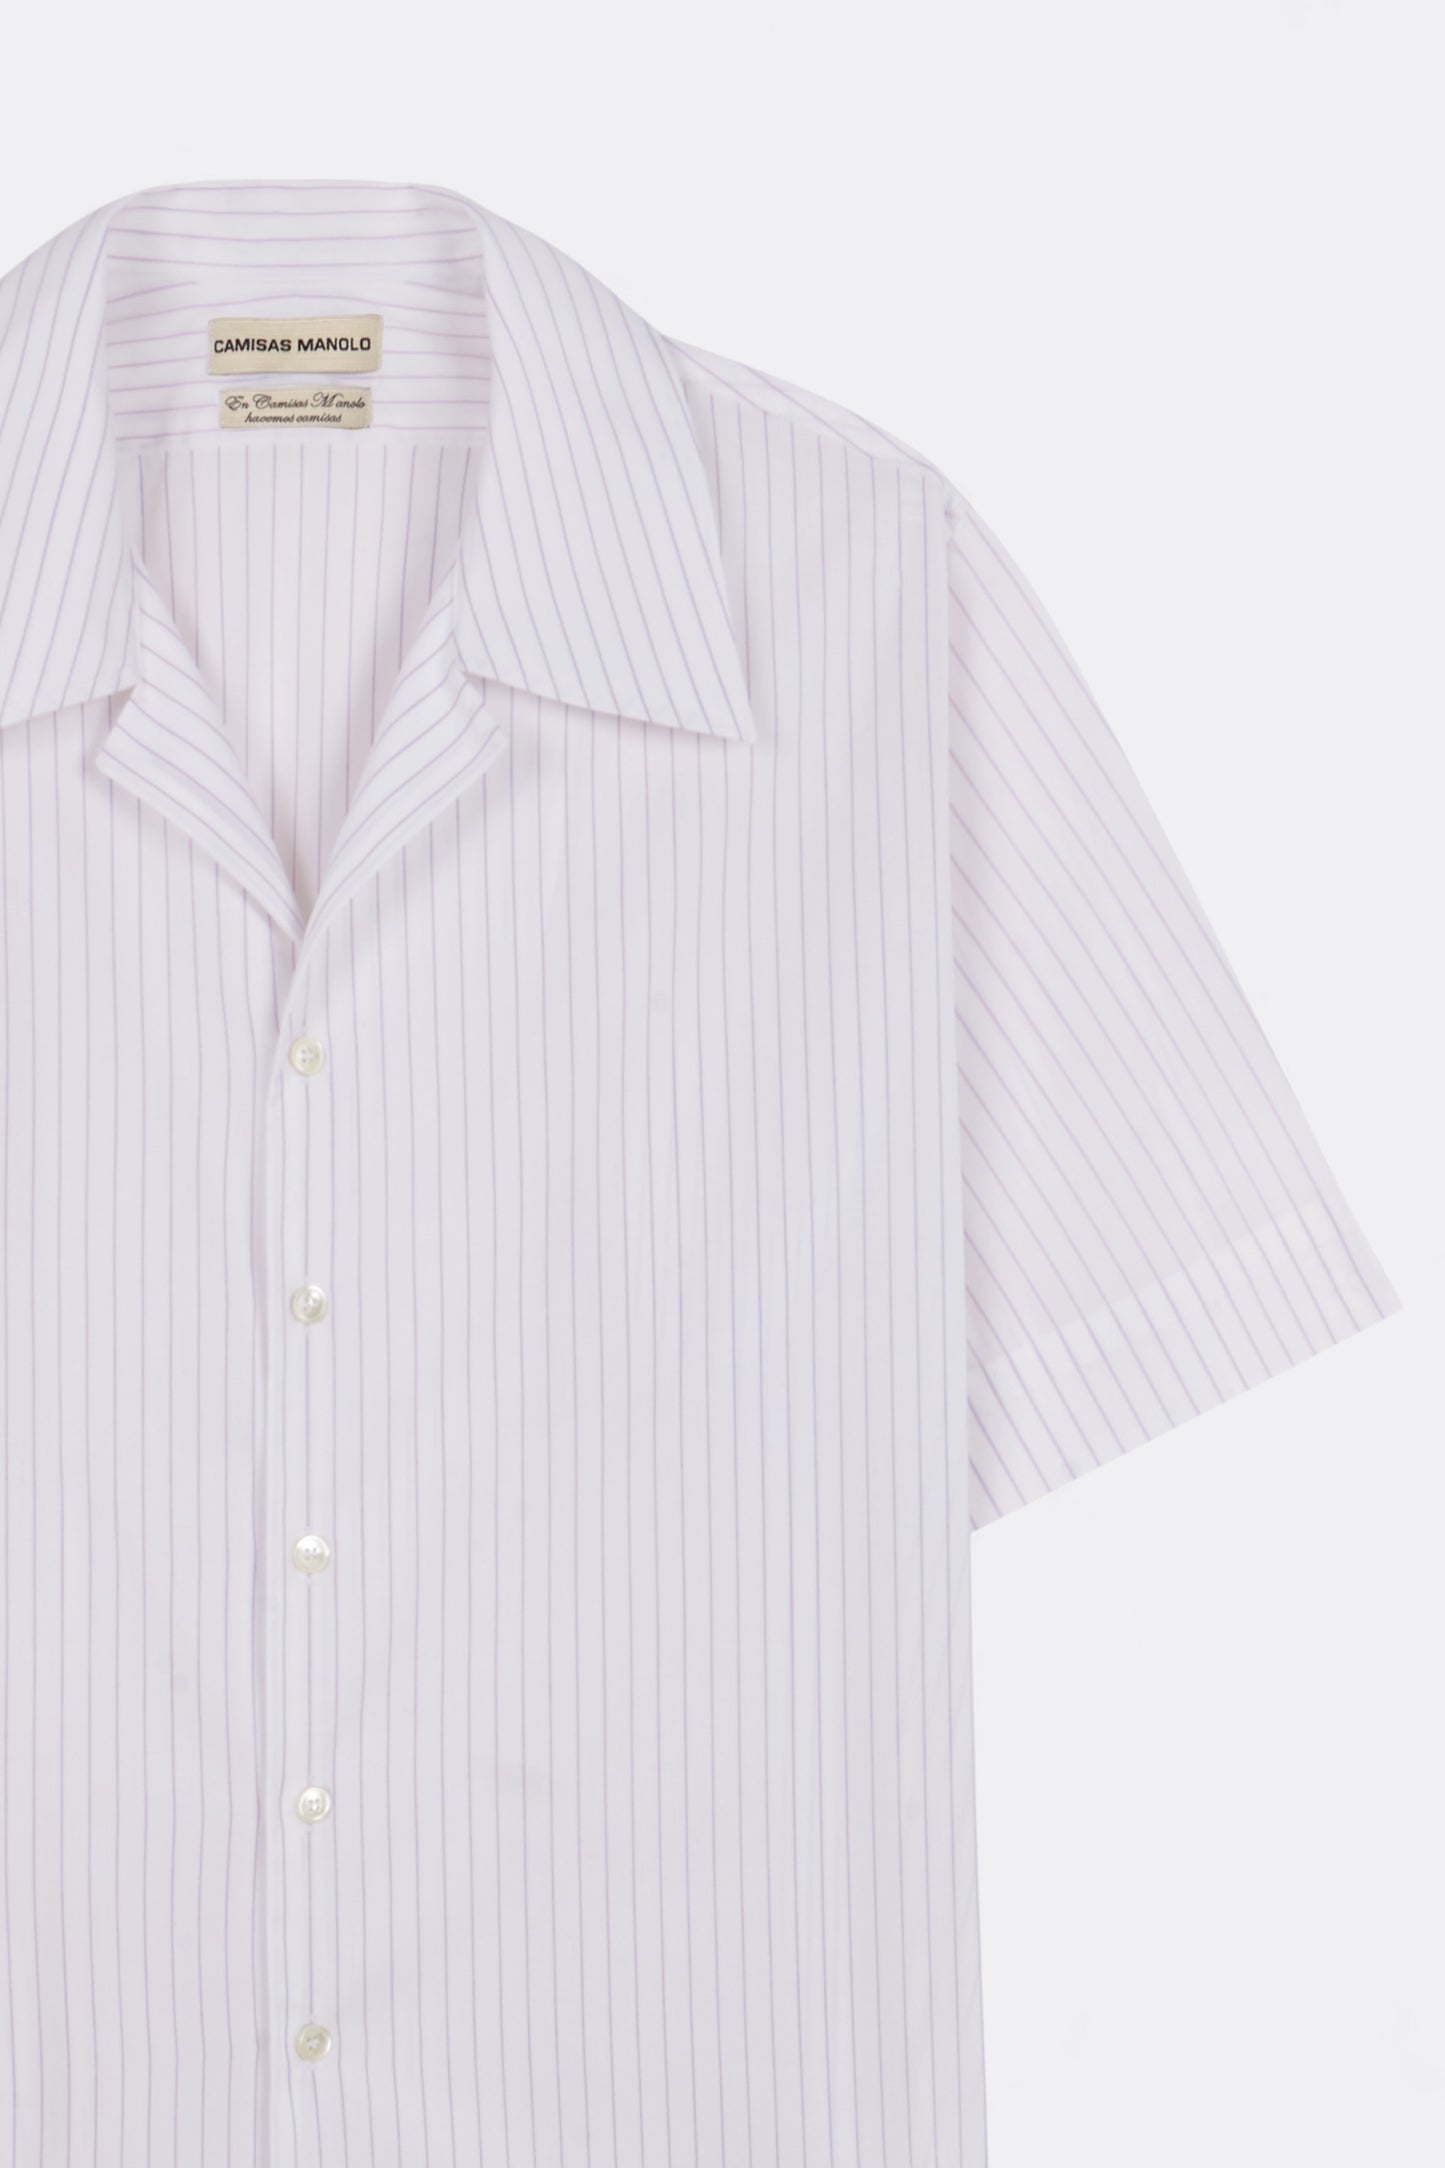 Camisas Manolo - School Shirt (Lilac Stripes White)